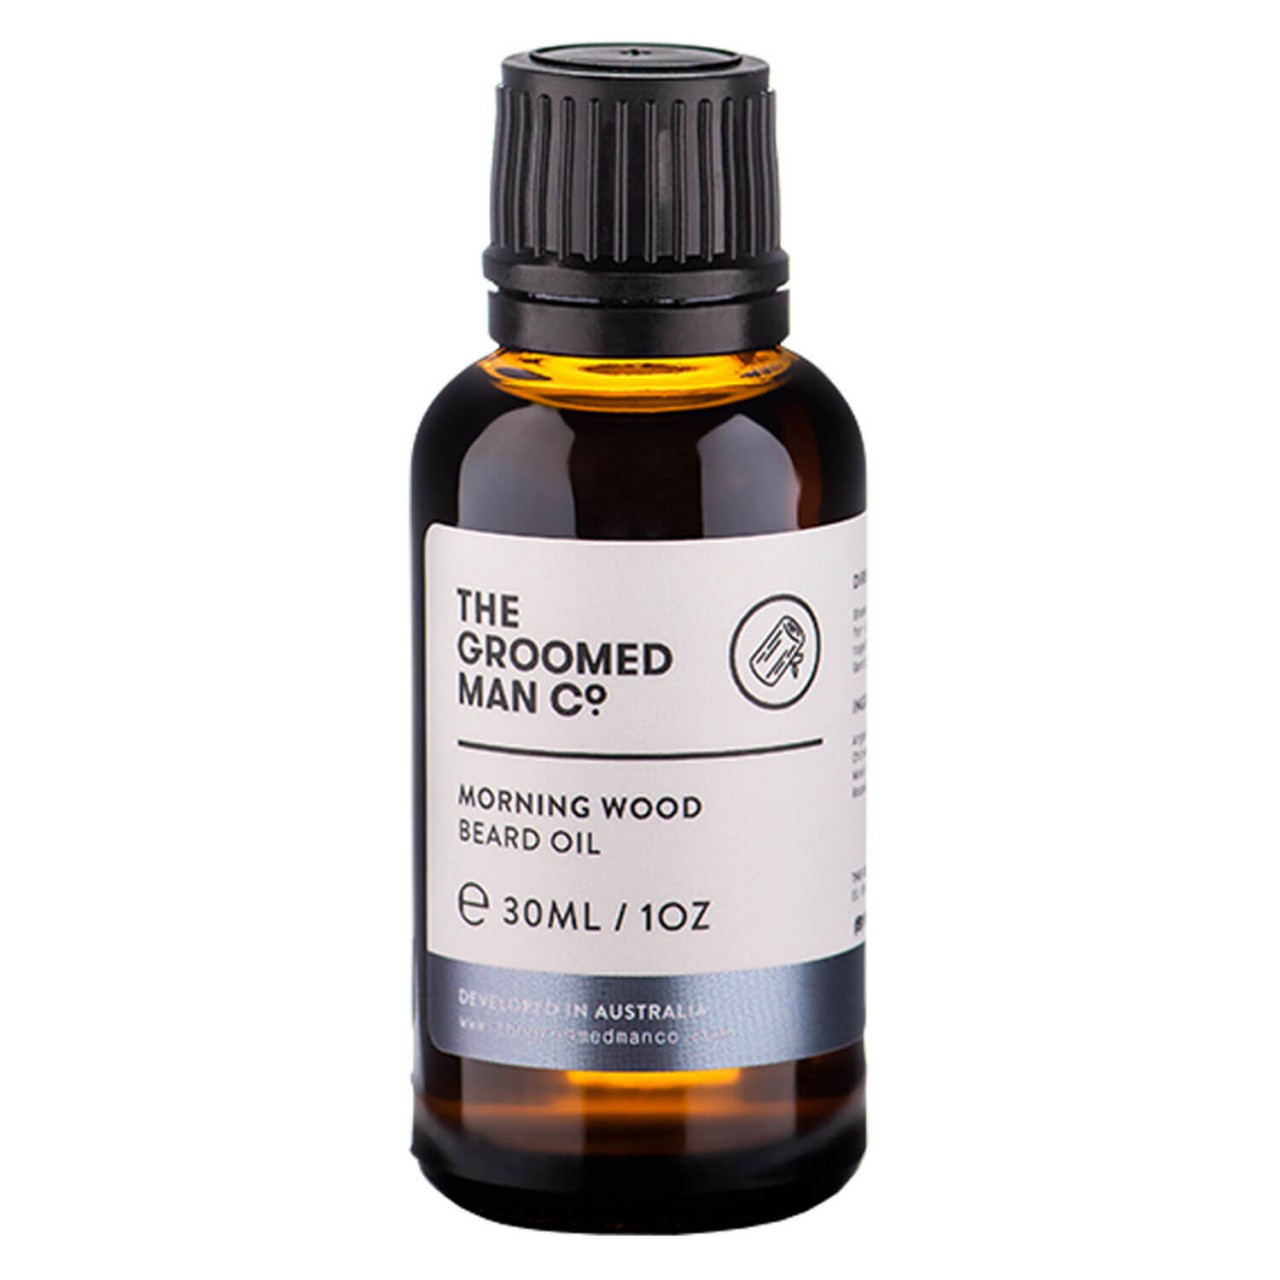 THE GROOMED MAN CO. - Morning Wood Beard Oil von THE GROOMED MAN CO.